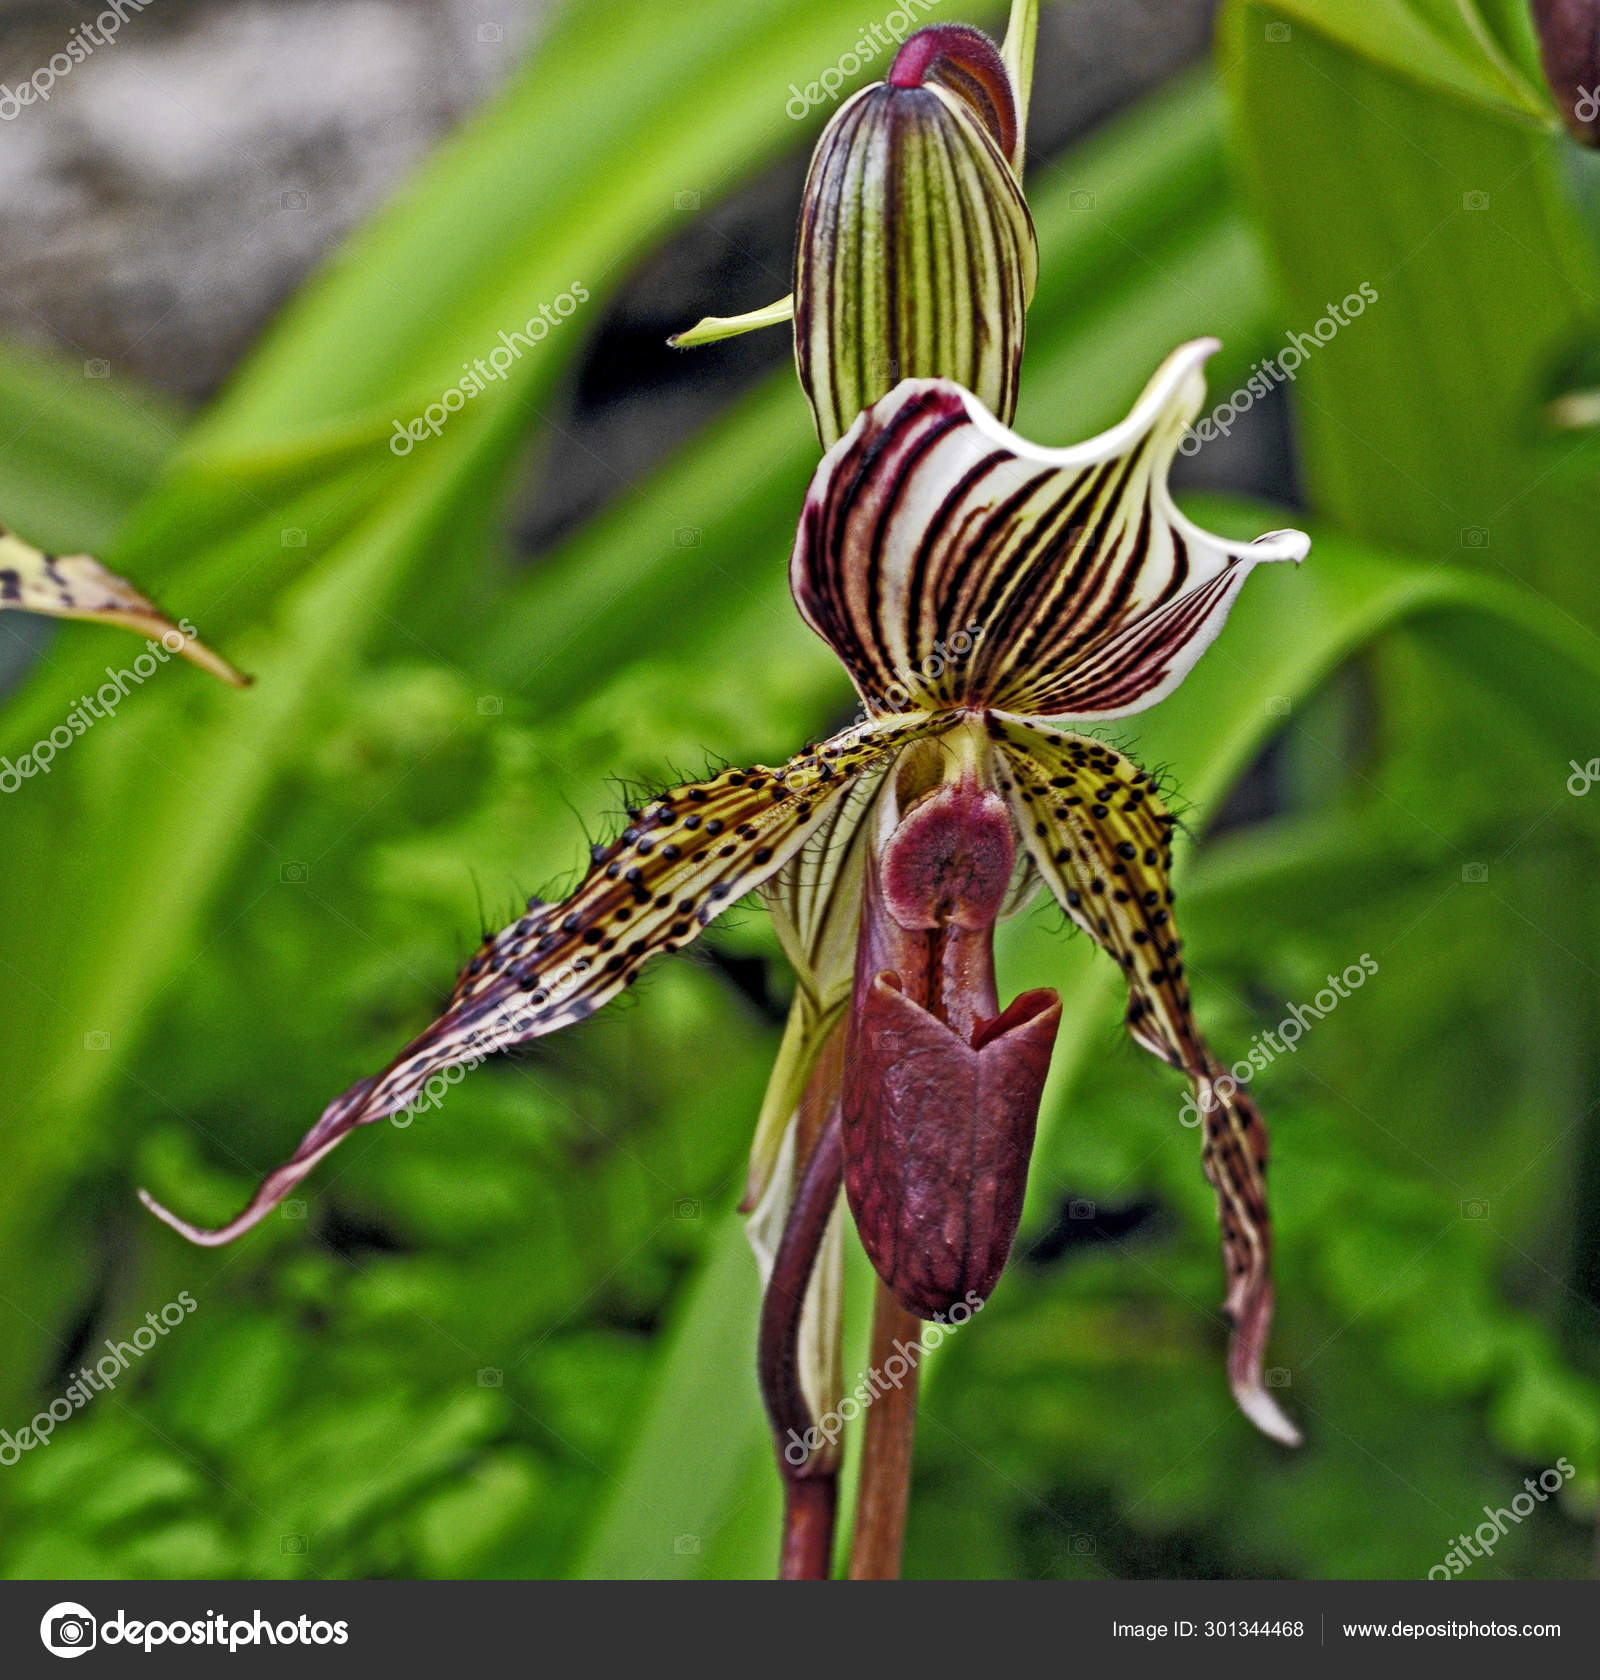 Fotos de Slipper orchid, Imagens de Slipper orchid sem royalties |  Depositphotos